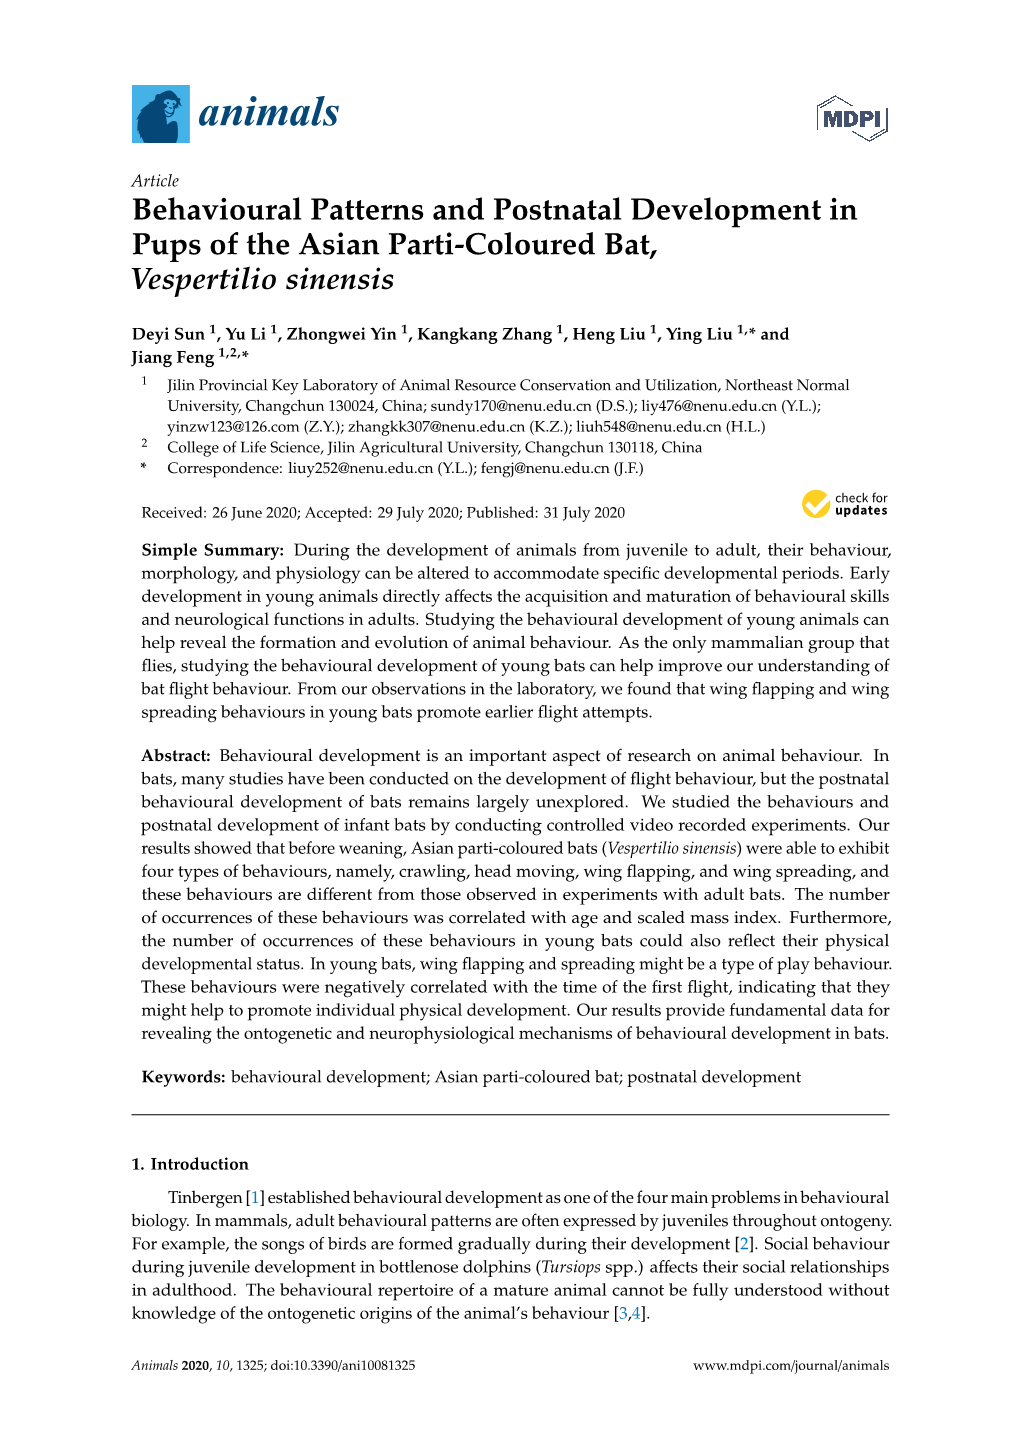 Behavioural Patterns and Postnatal Development in Pups of the Asian Parti-Coloured Bat, Vespertilio Sinensis